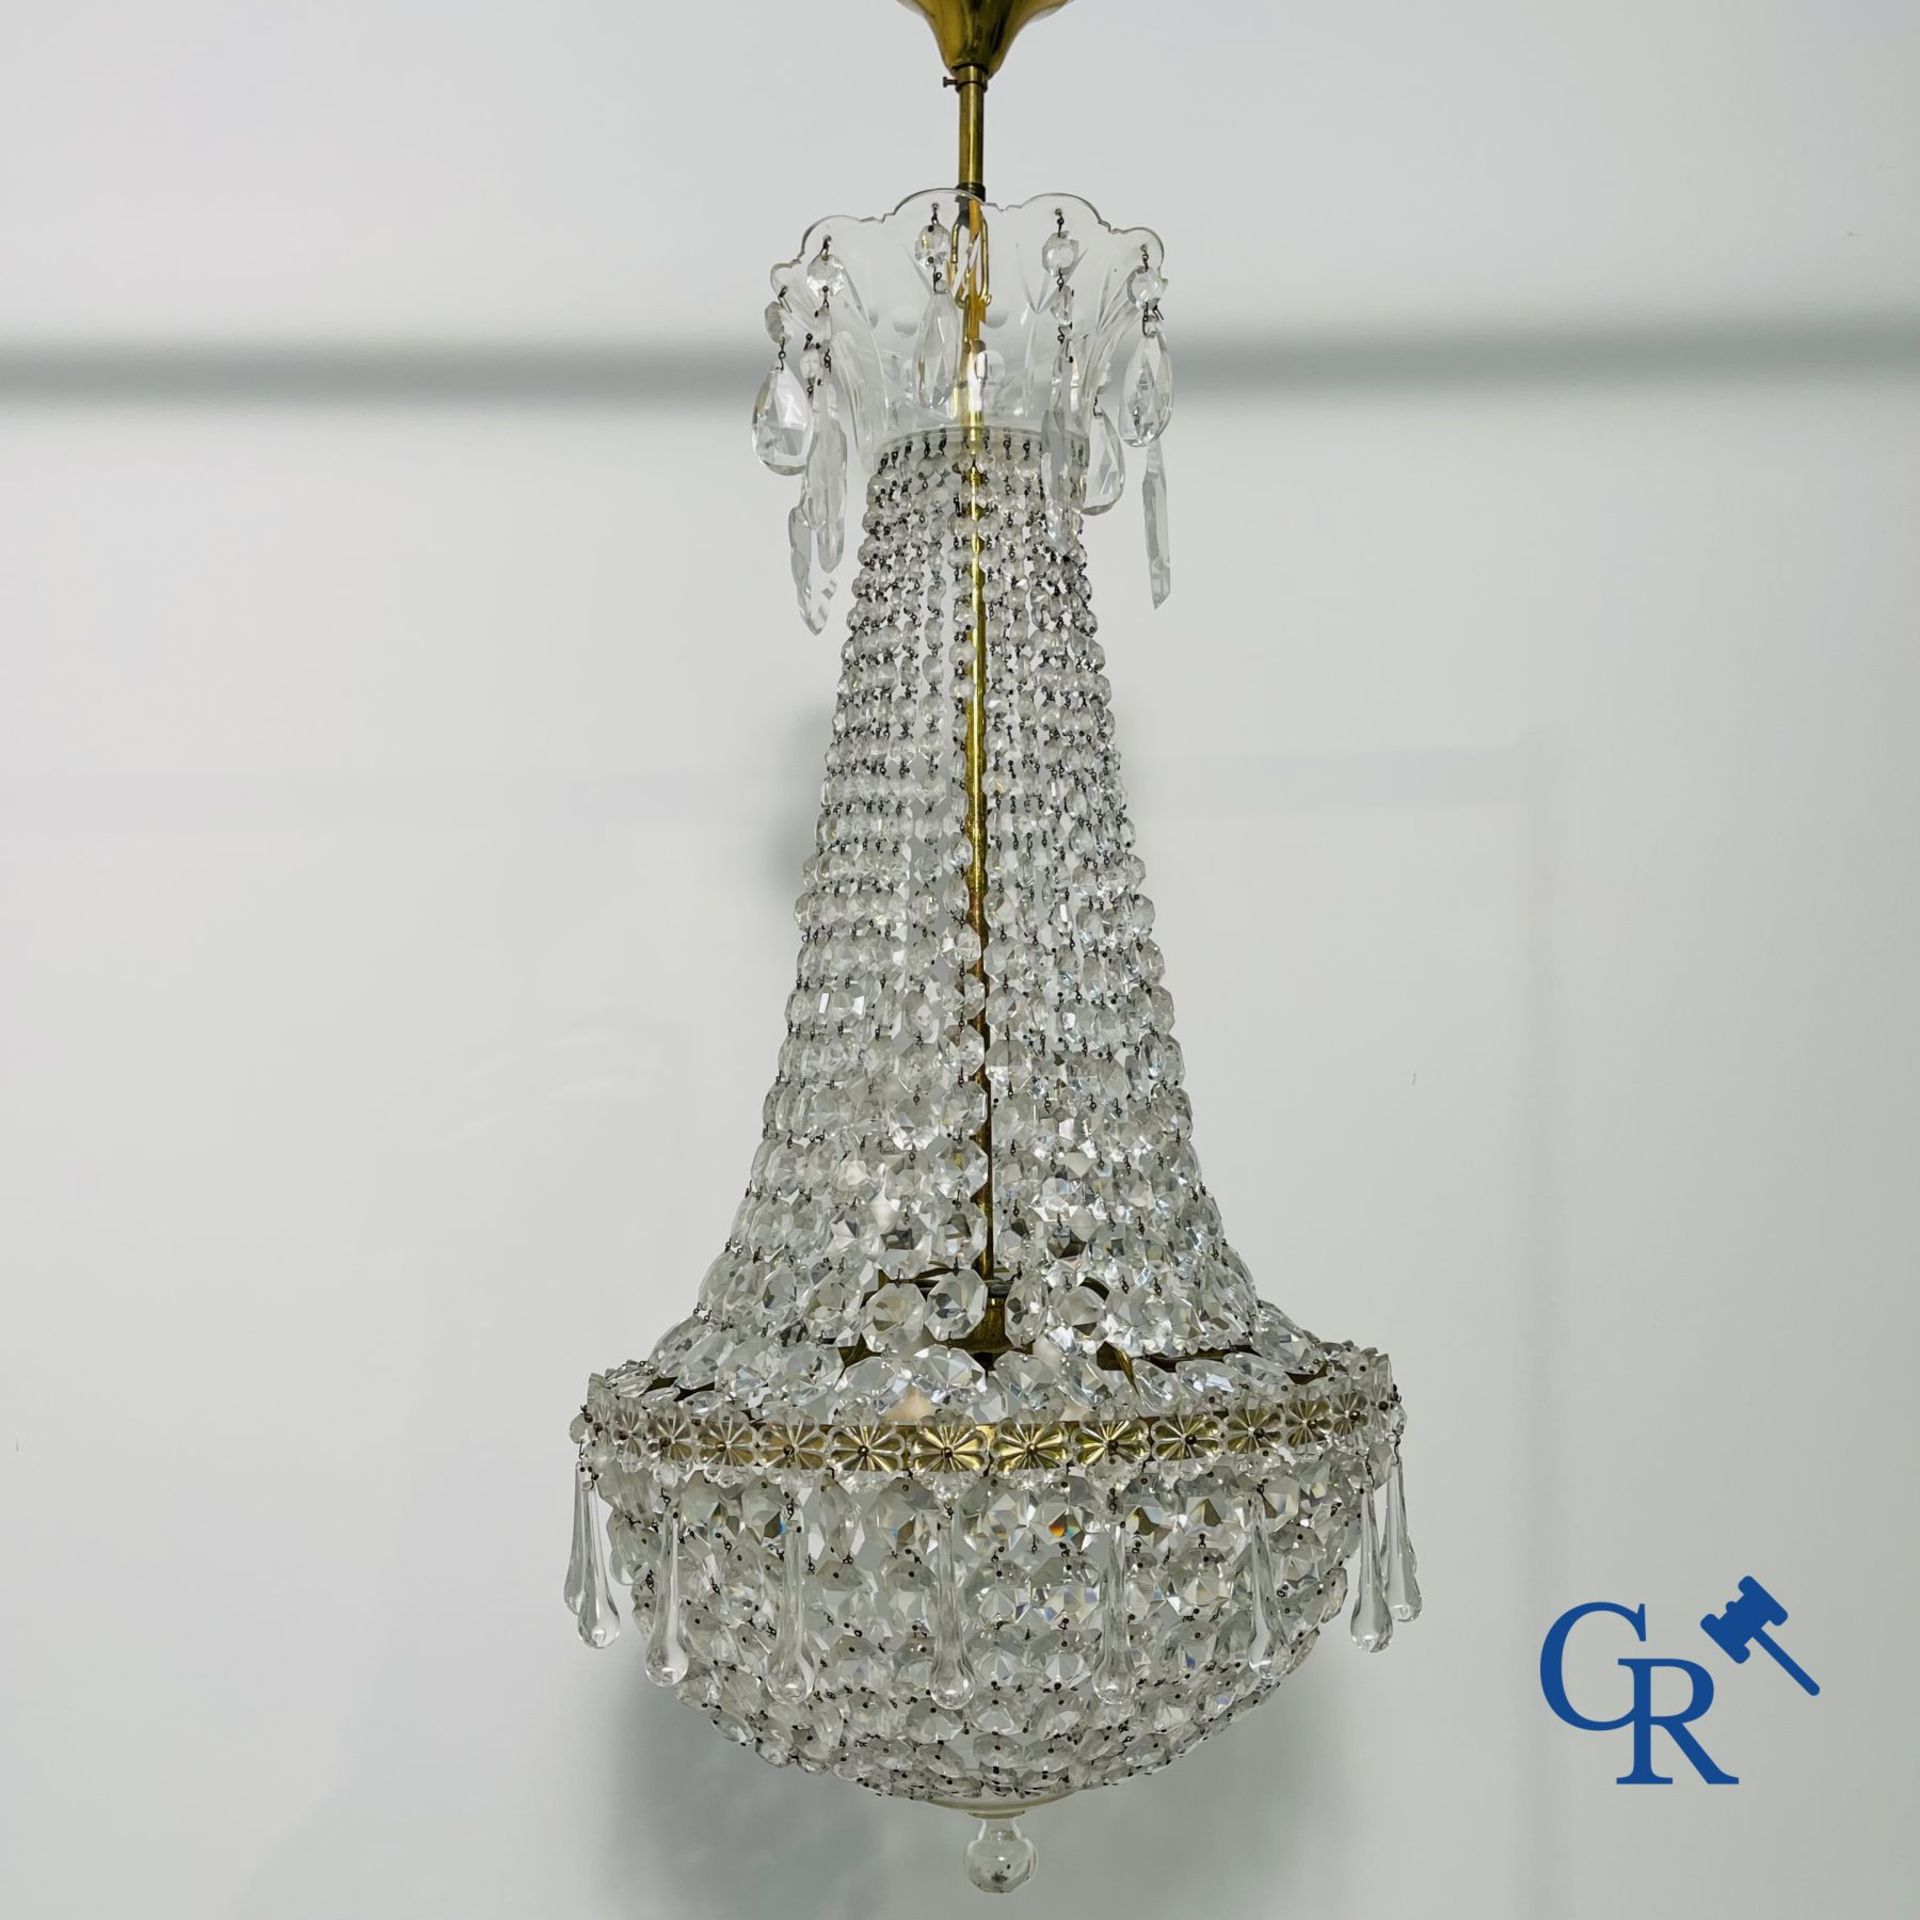 Chandelier: Beautiful Sac à pearles chandelier in crystal. - Image 4 of 9